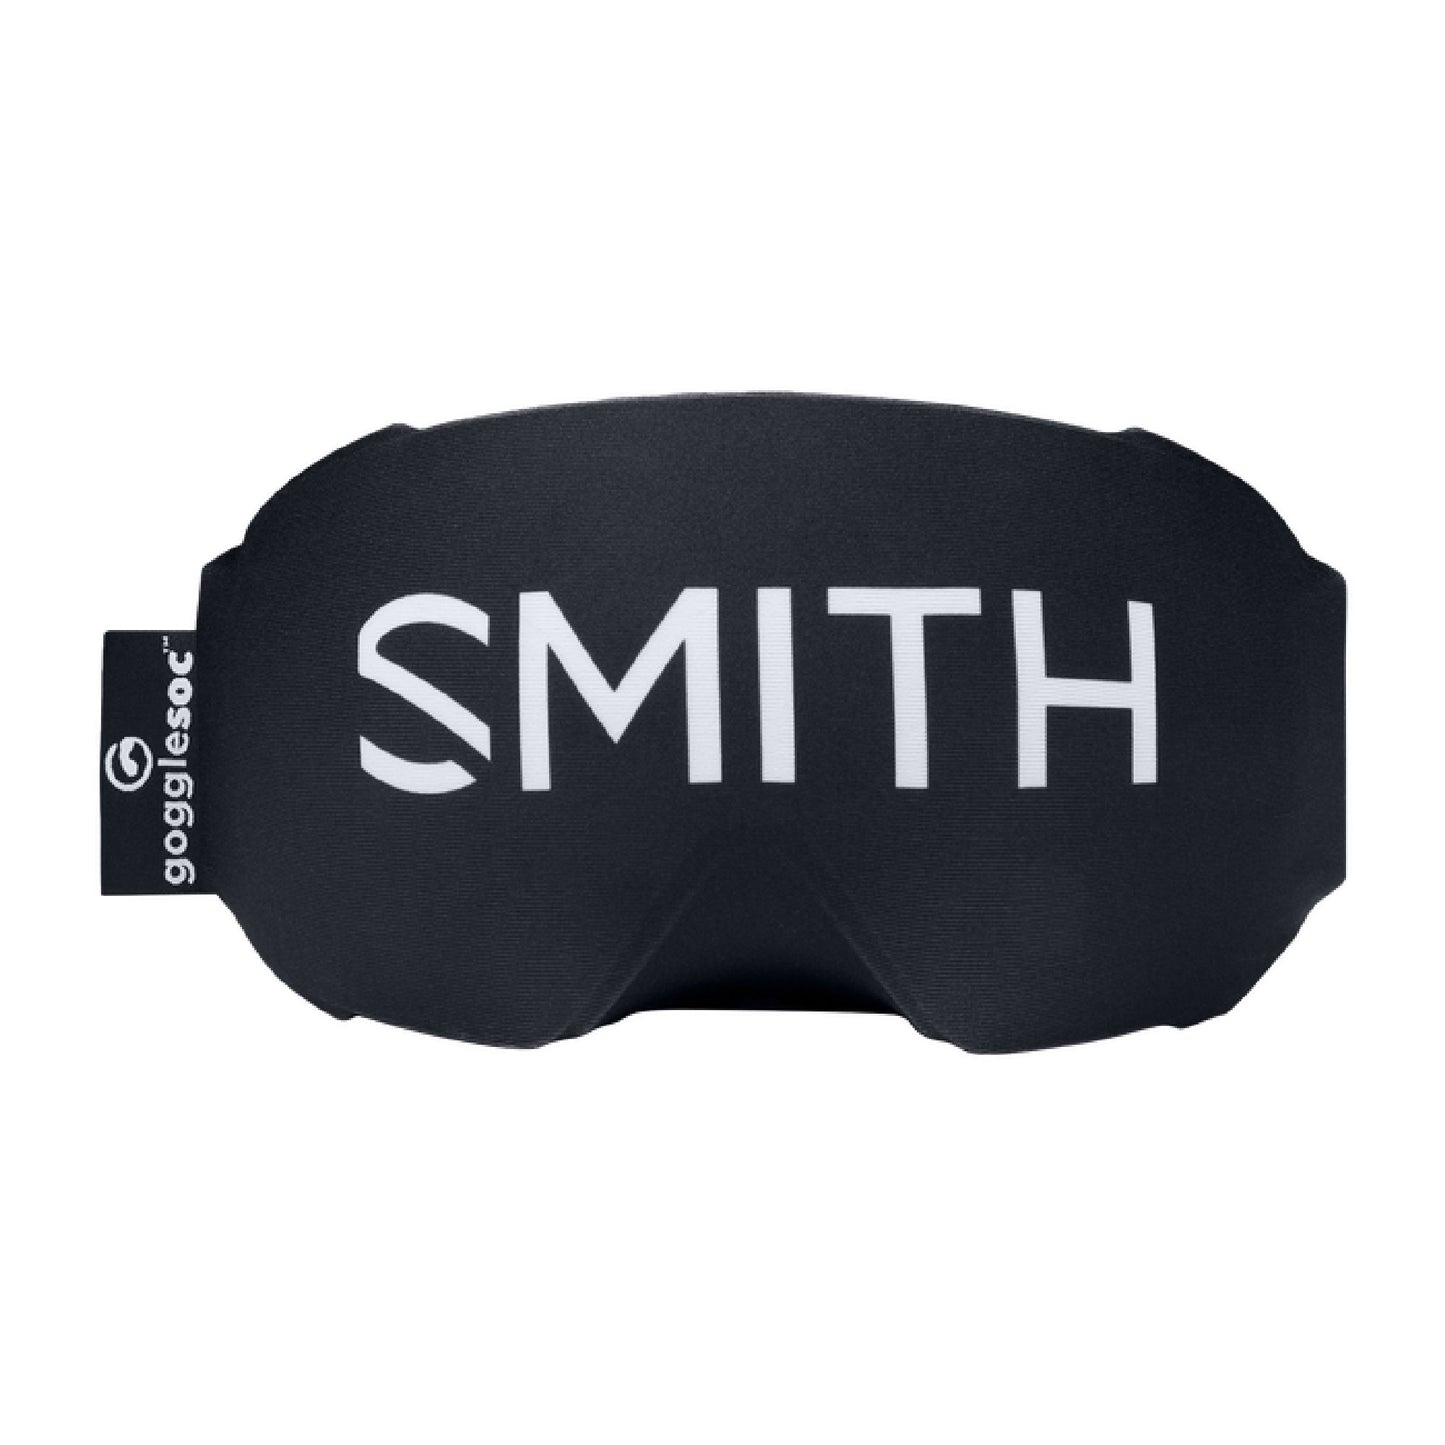 Smith I/O MAG Snow Goggle White Vapor / ChromaPop Everyday Rose Gold Mirror Snow Goggles